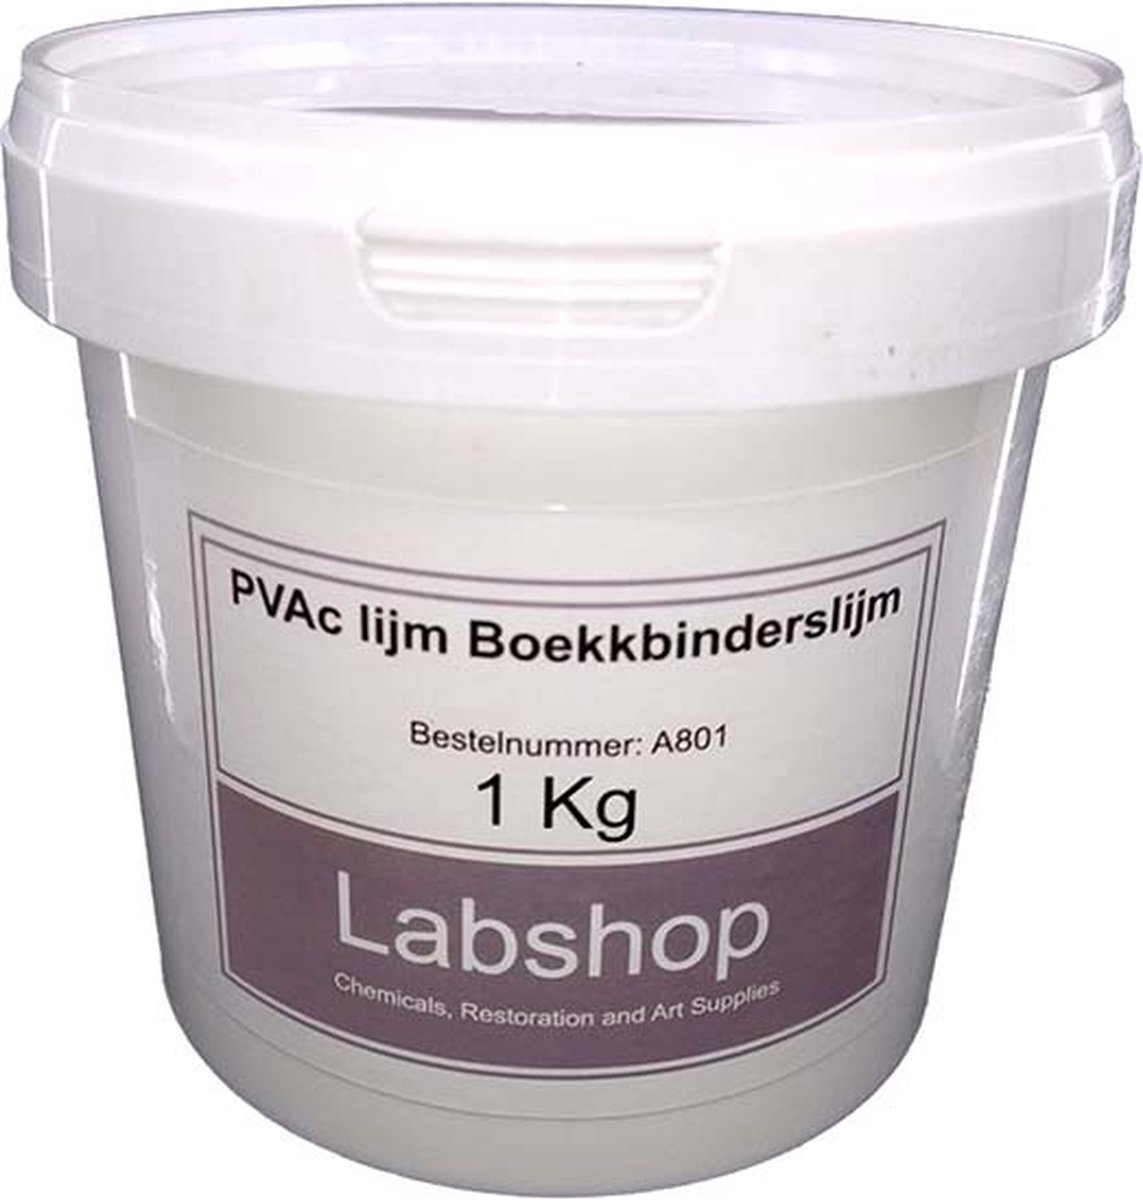 Labshop - PVAc lijm boekbinderslijm 1 kilogram